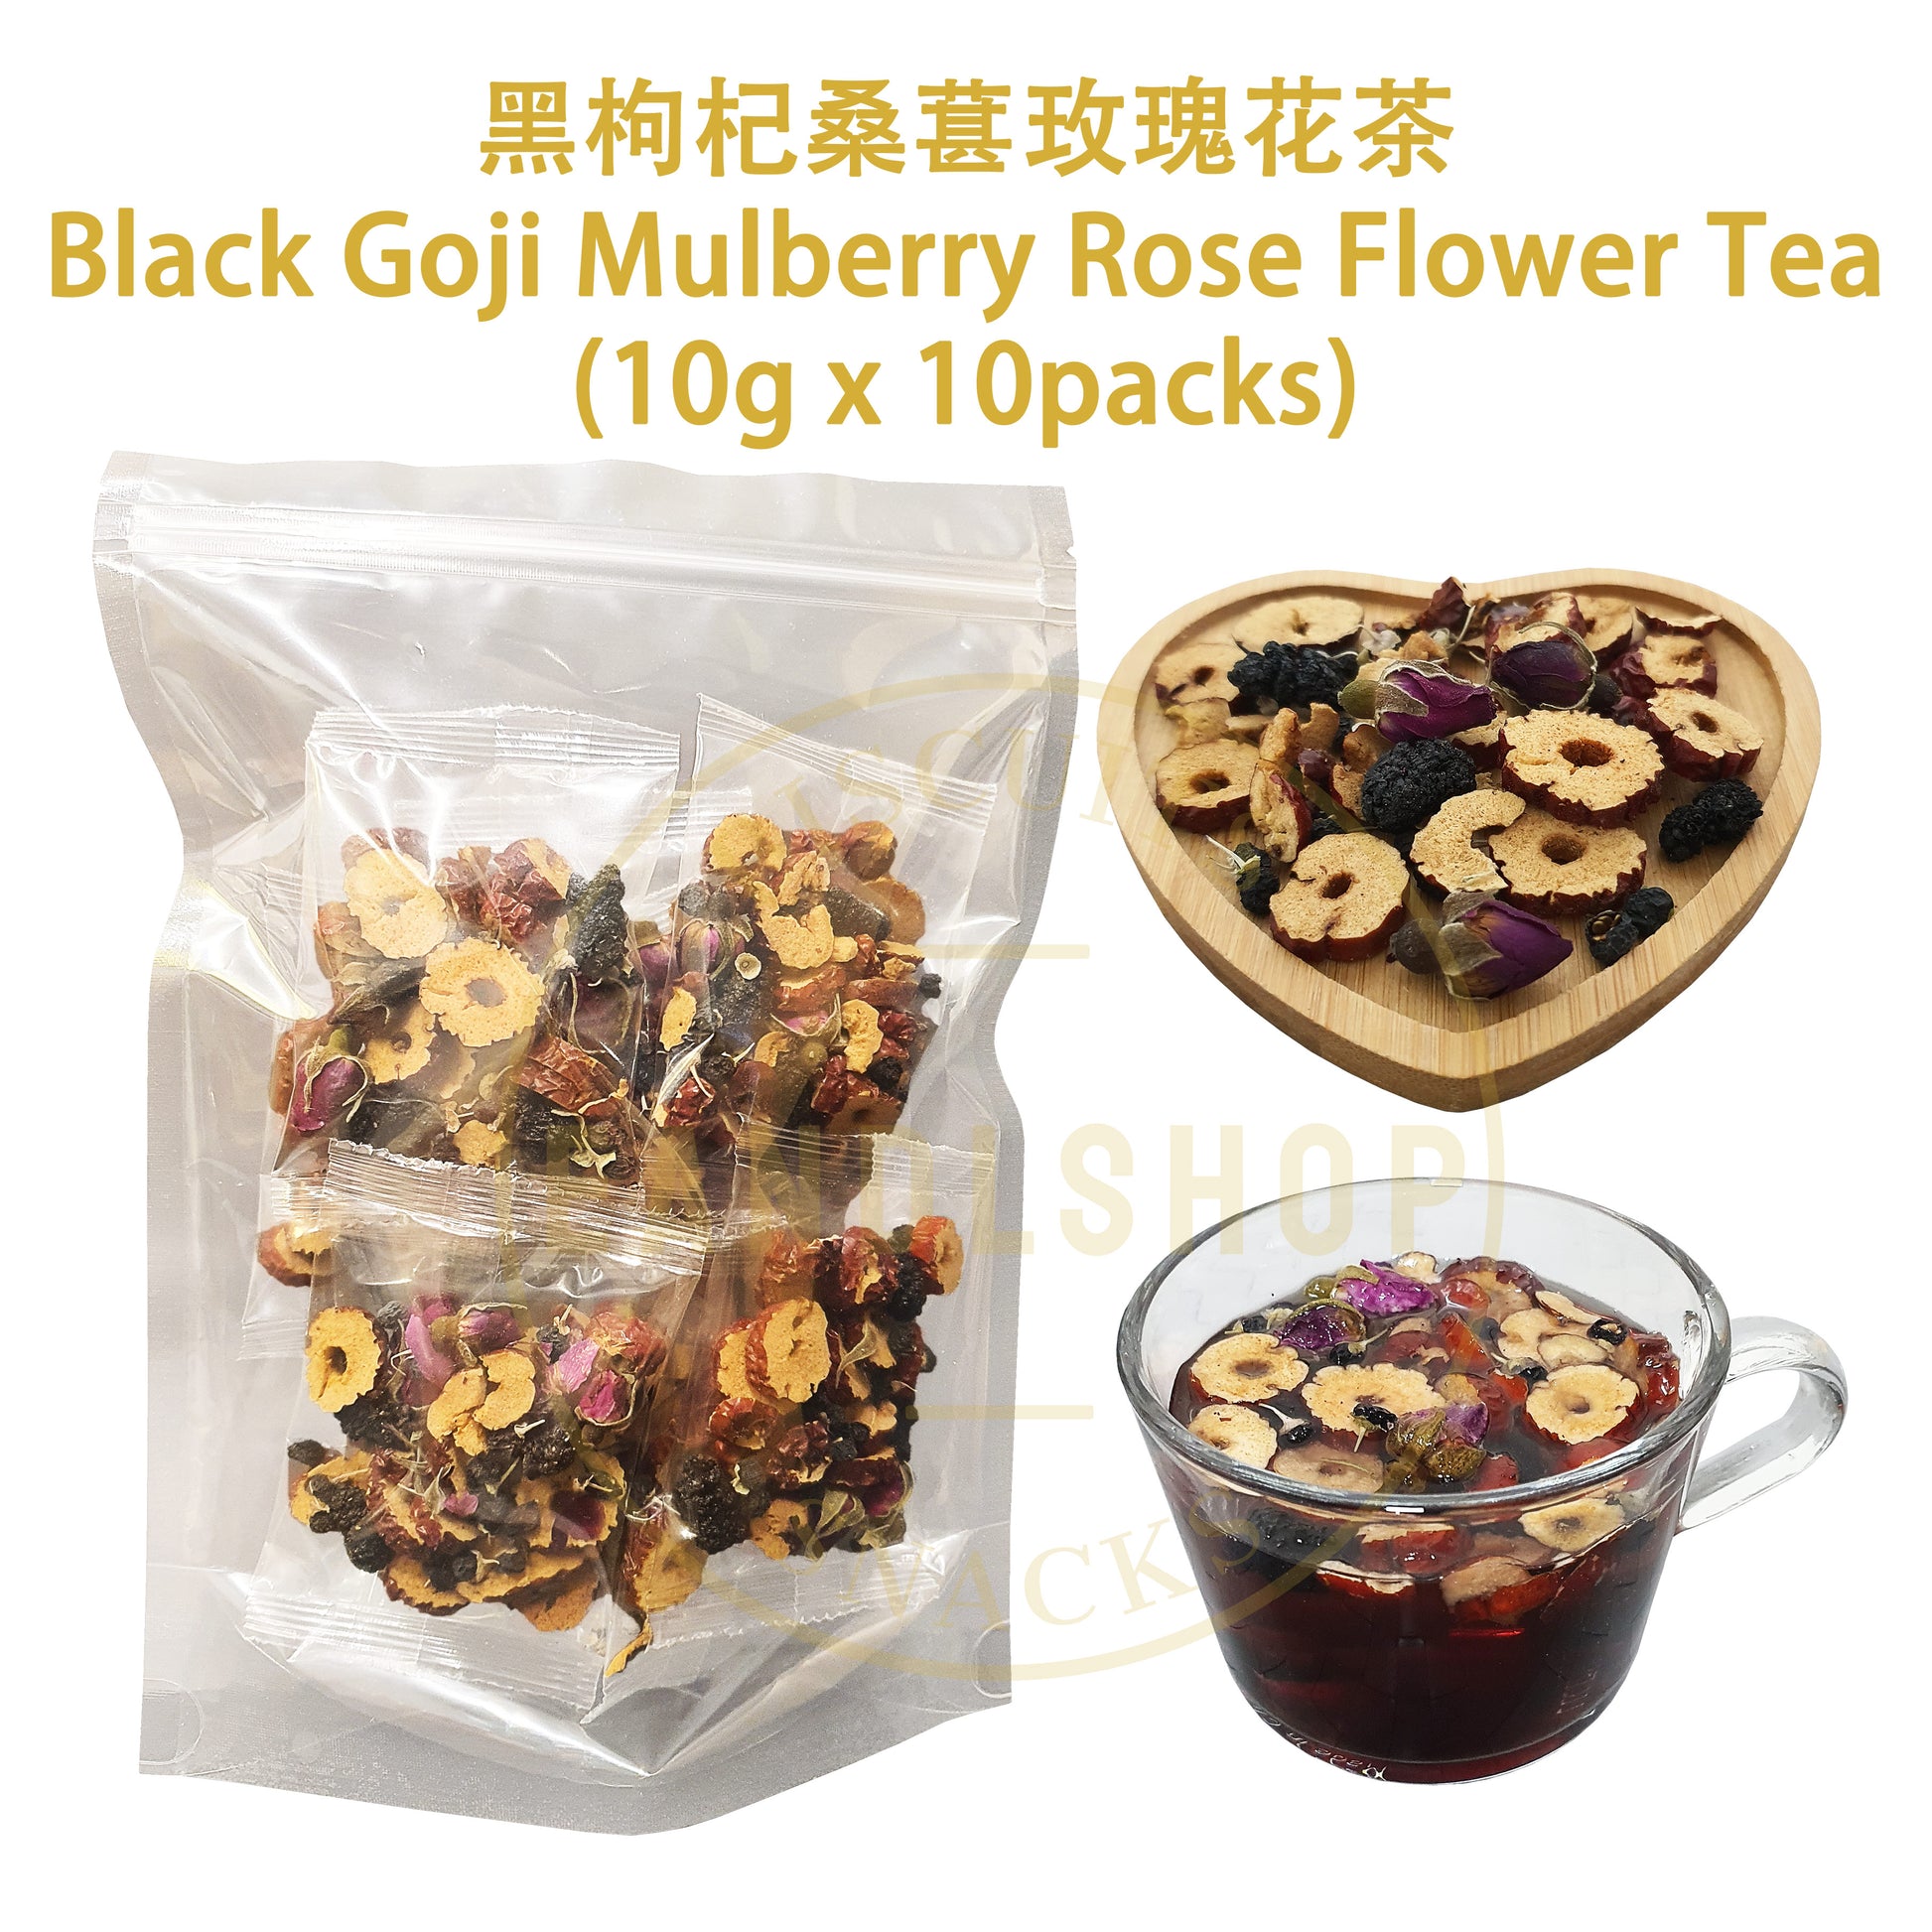 Black Goji Mulberry Rose FlowerTea.Old-school biscuits, modern snacks (chips, crackers), cakes, gummies, plums, dried fruits, nuts, herbal tea – available at www.EANDLSHOP.com